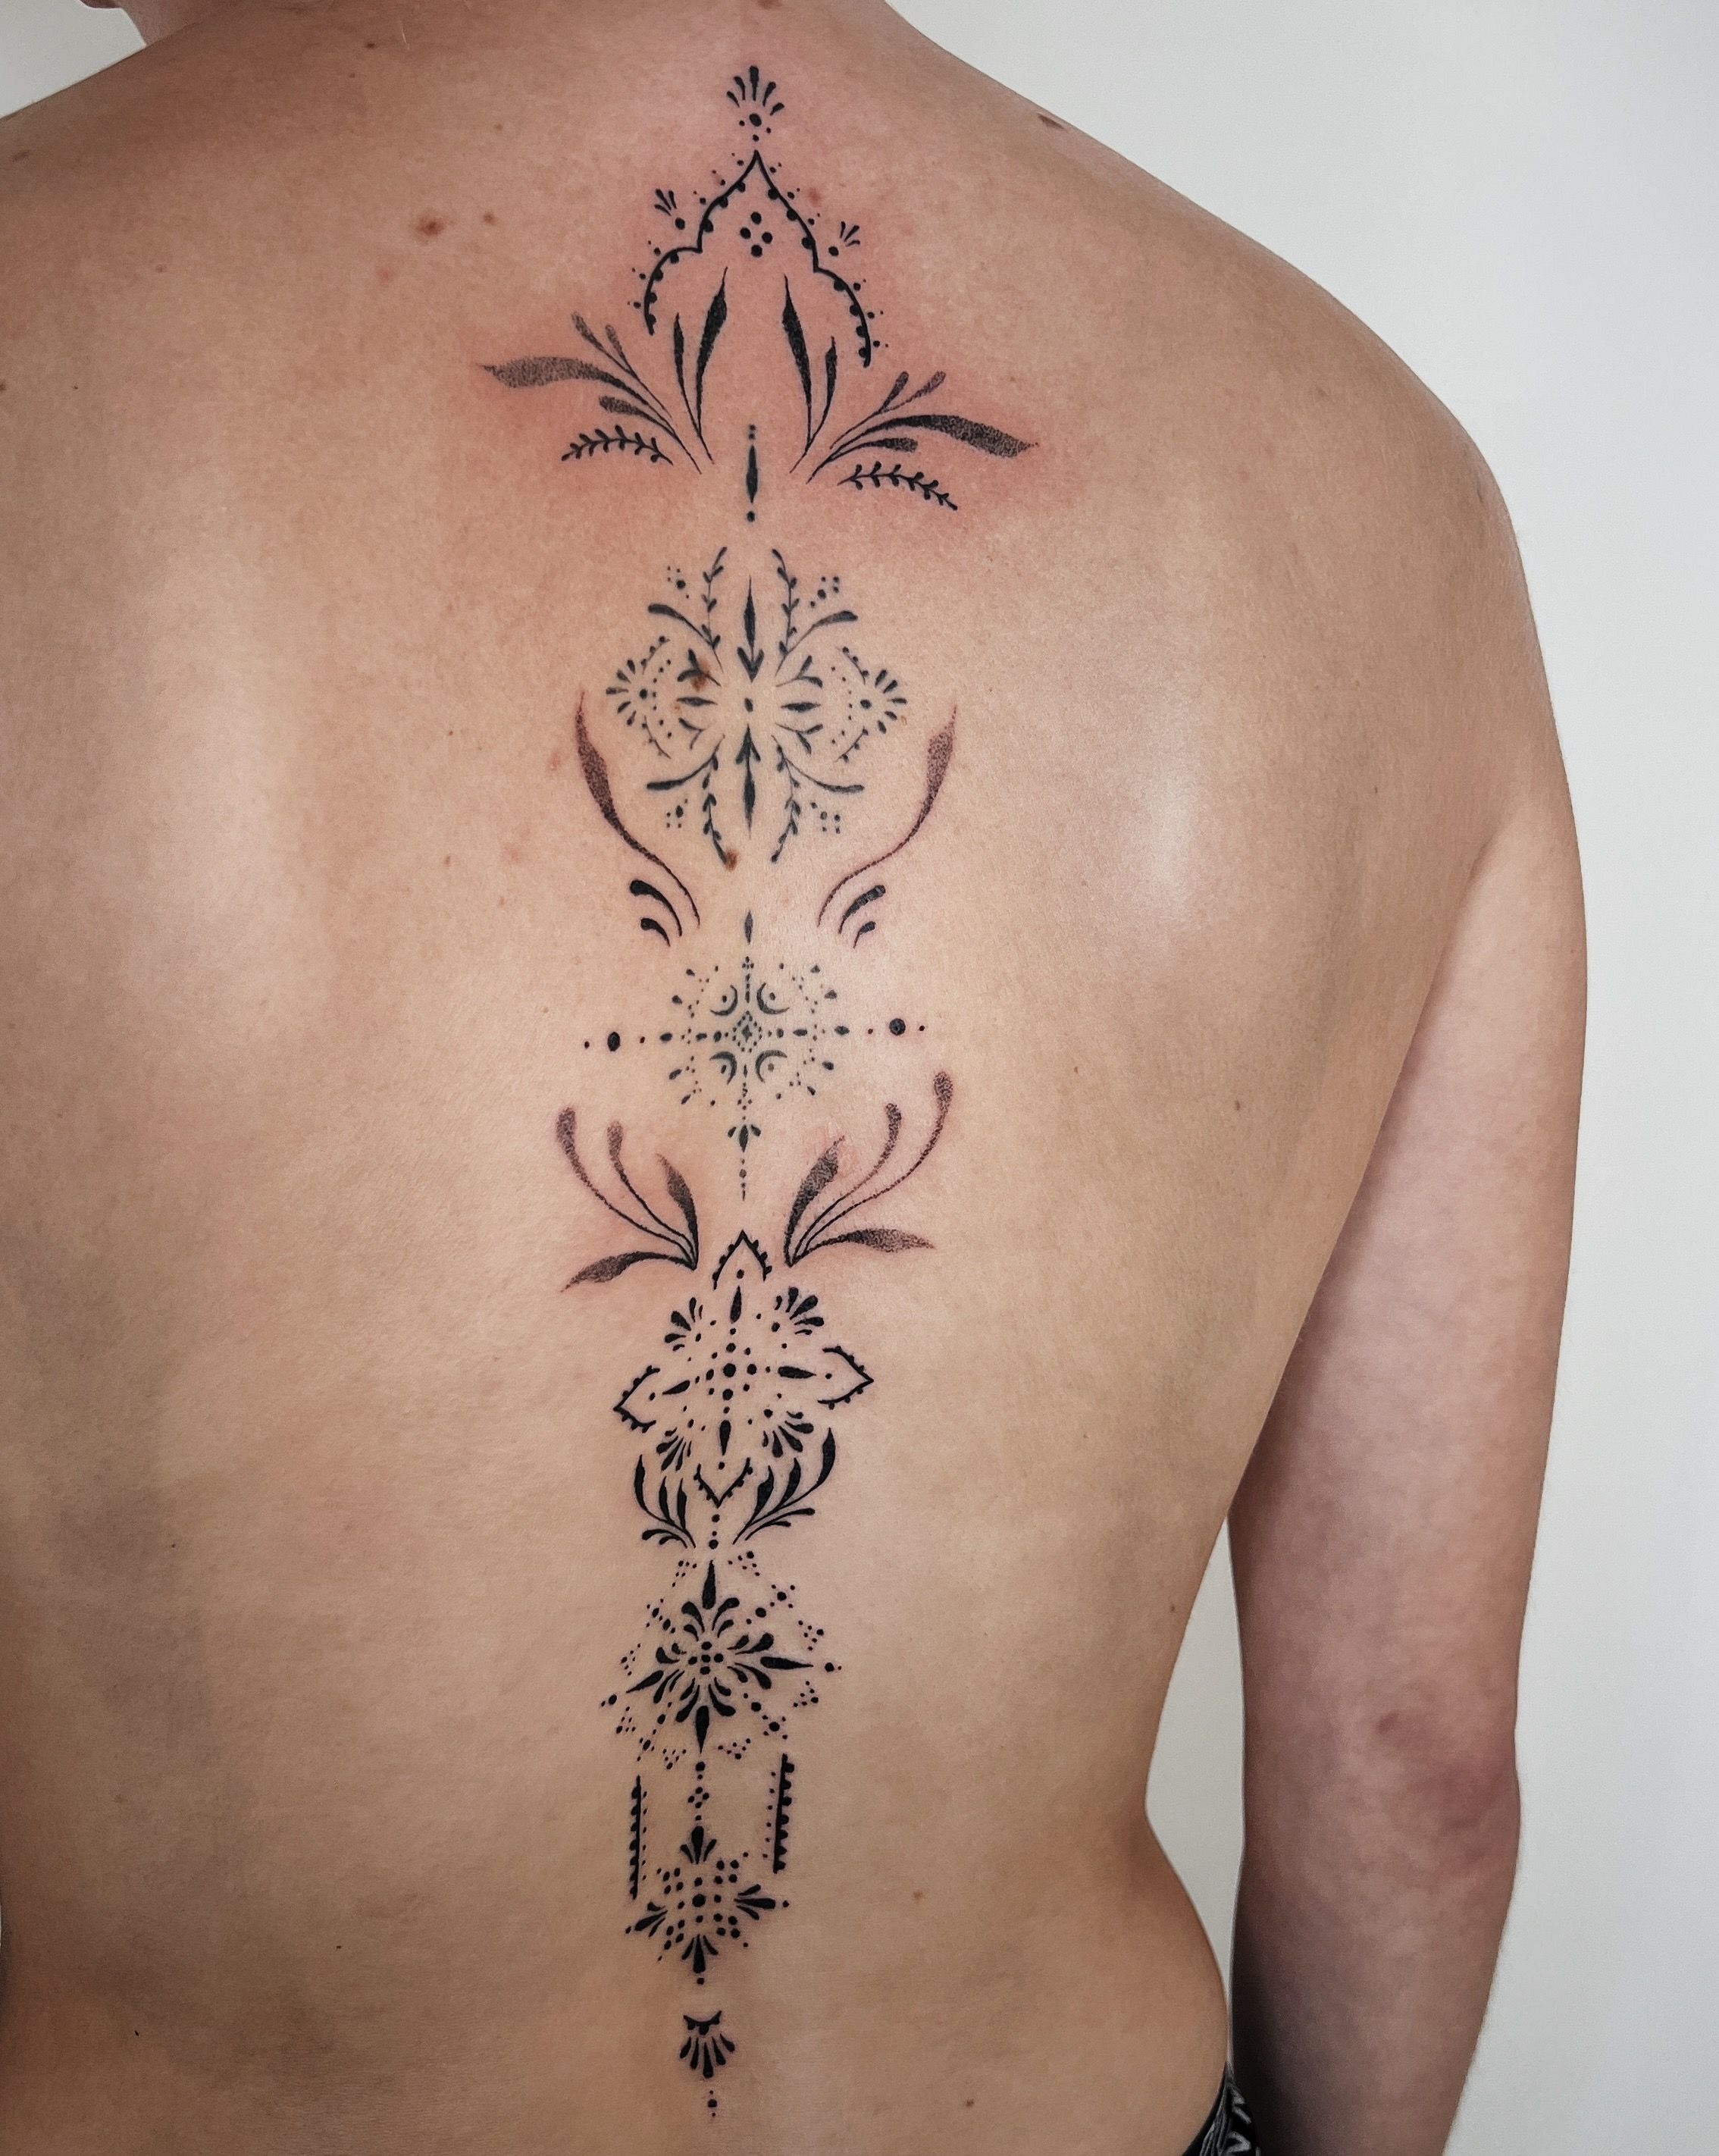 Spine tattoo idea | Spine tattoos for women, Vertical tattoo, Spine tattoos